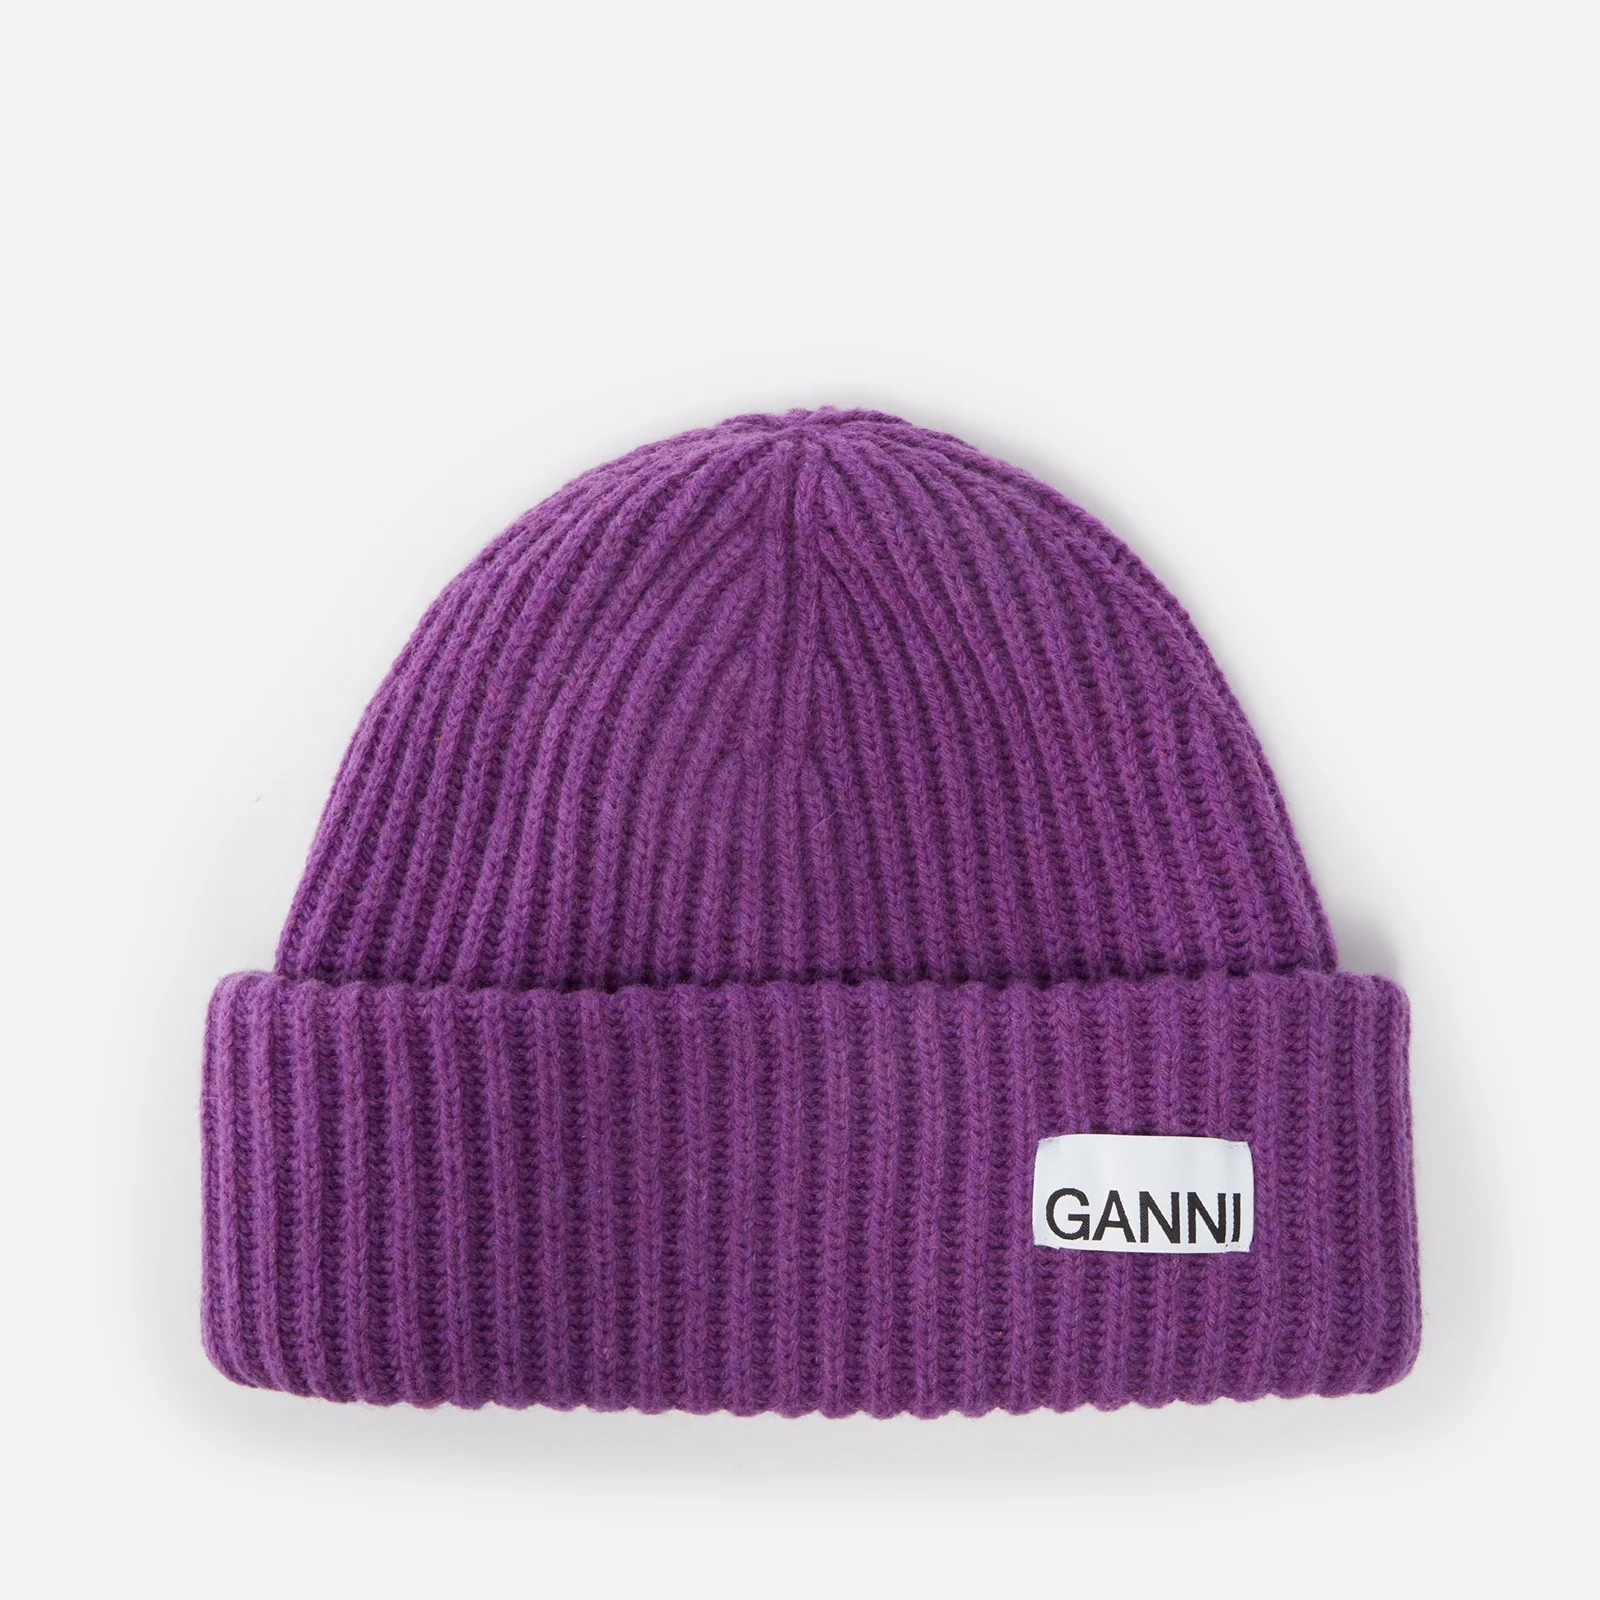 Ganni Structured Rib-Knit Beanie Image 1